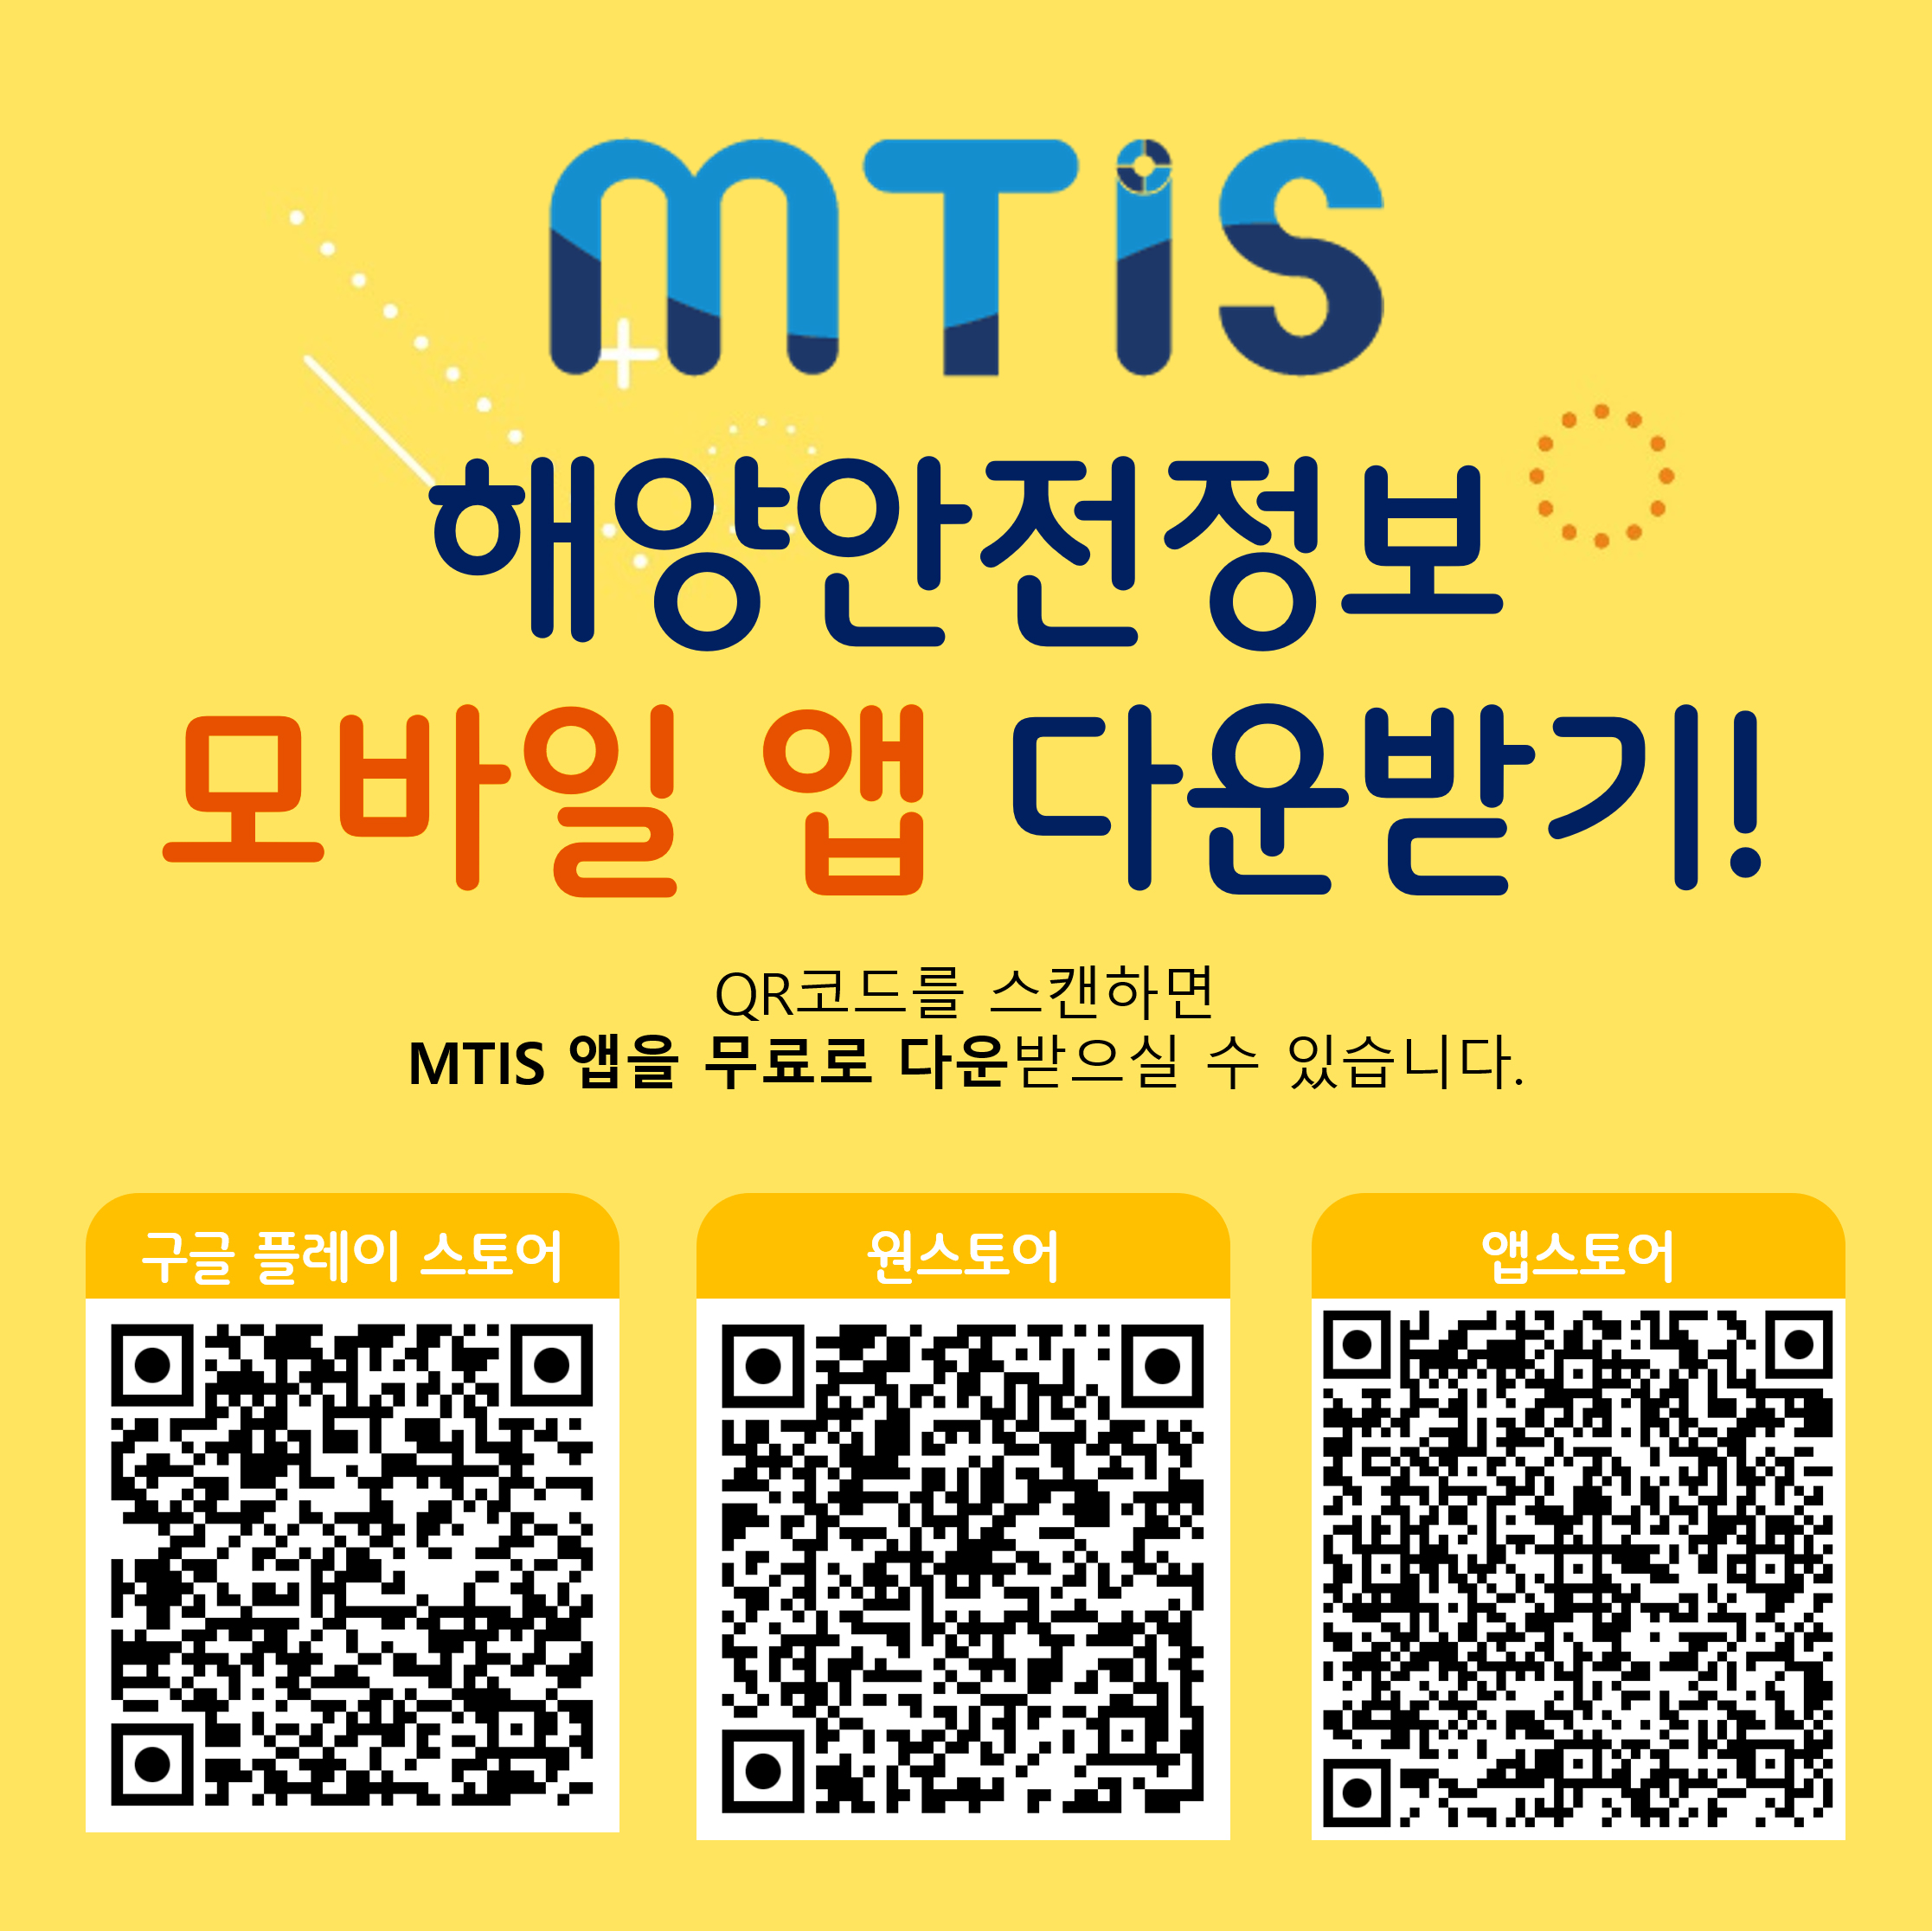 MTIS 해양안전정보 모바일 앱 다운받기!
QR코드를 스캔하면 MTIS 앱을 무료로 다운 받으실수 있습니다.
구글 플레이 스토어 : https://play.google.com/store/apps/details;jsessionid=1DCD0152798315C369906BB95485AEF3?id=kr.or.komsa.mtis
원스토어 : https://m.onestore.co.kr/mobilepoc/apps/appsDetail.omp?prodId=0000771271
앱스토어 : https://apps.apple.com/kr/app/%ED%95%B4%EC%96%91%EA%B5%90%ED%86%B5%EC%95%88%EC%A0%84%EC%A0%95%EB%B3%B4/id6462842483